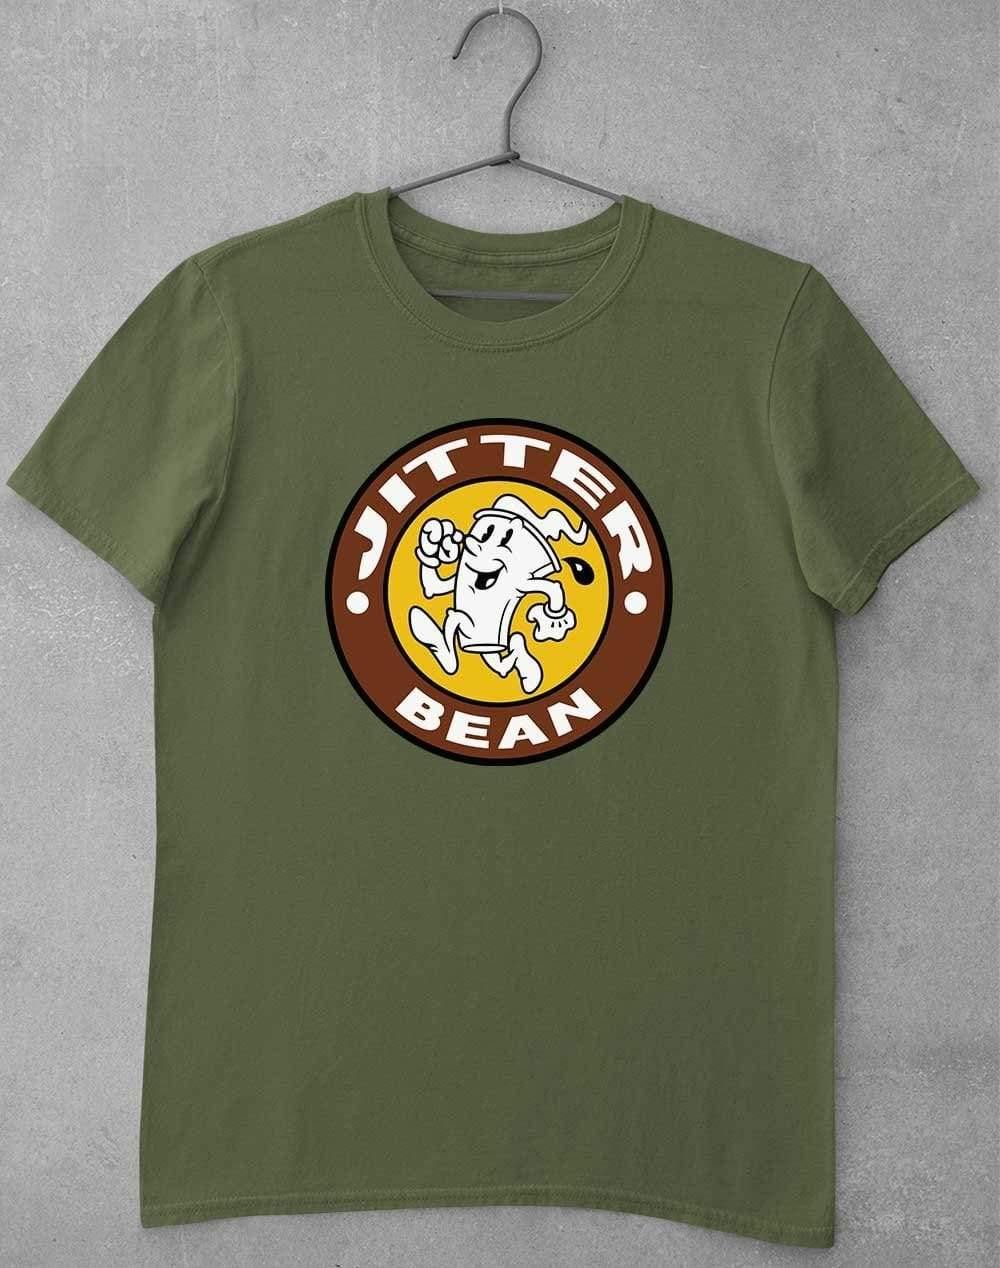 Jitter Bean T Shirt S / Military Green  - Off World Tees